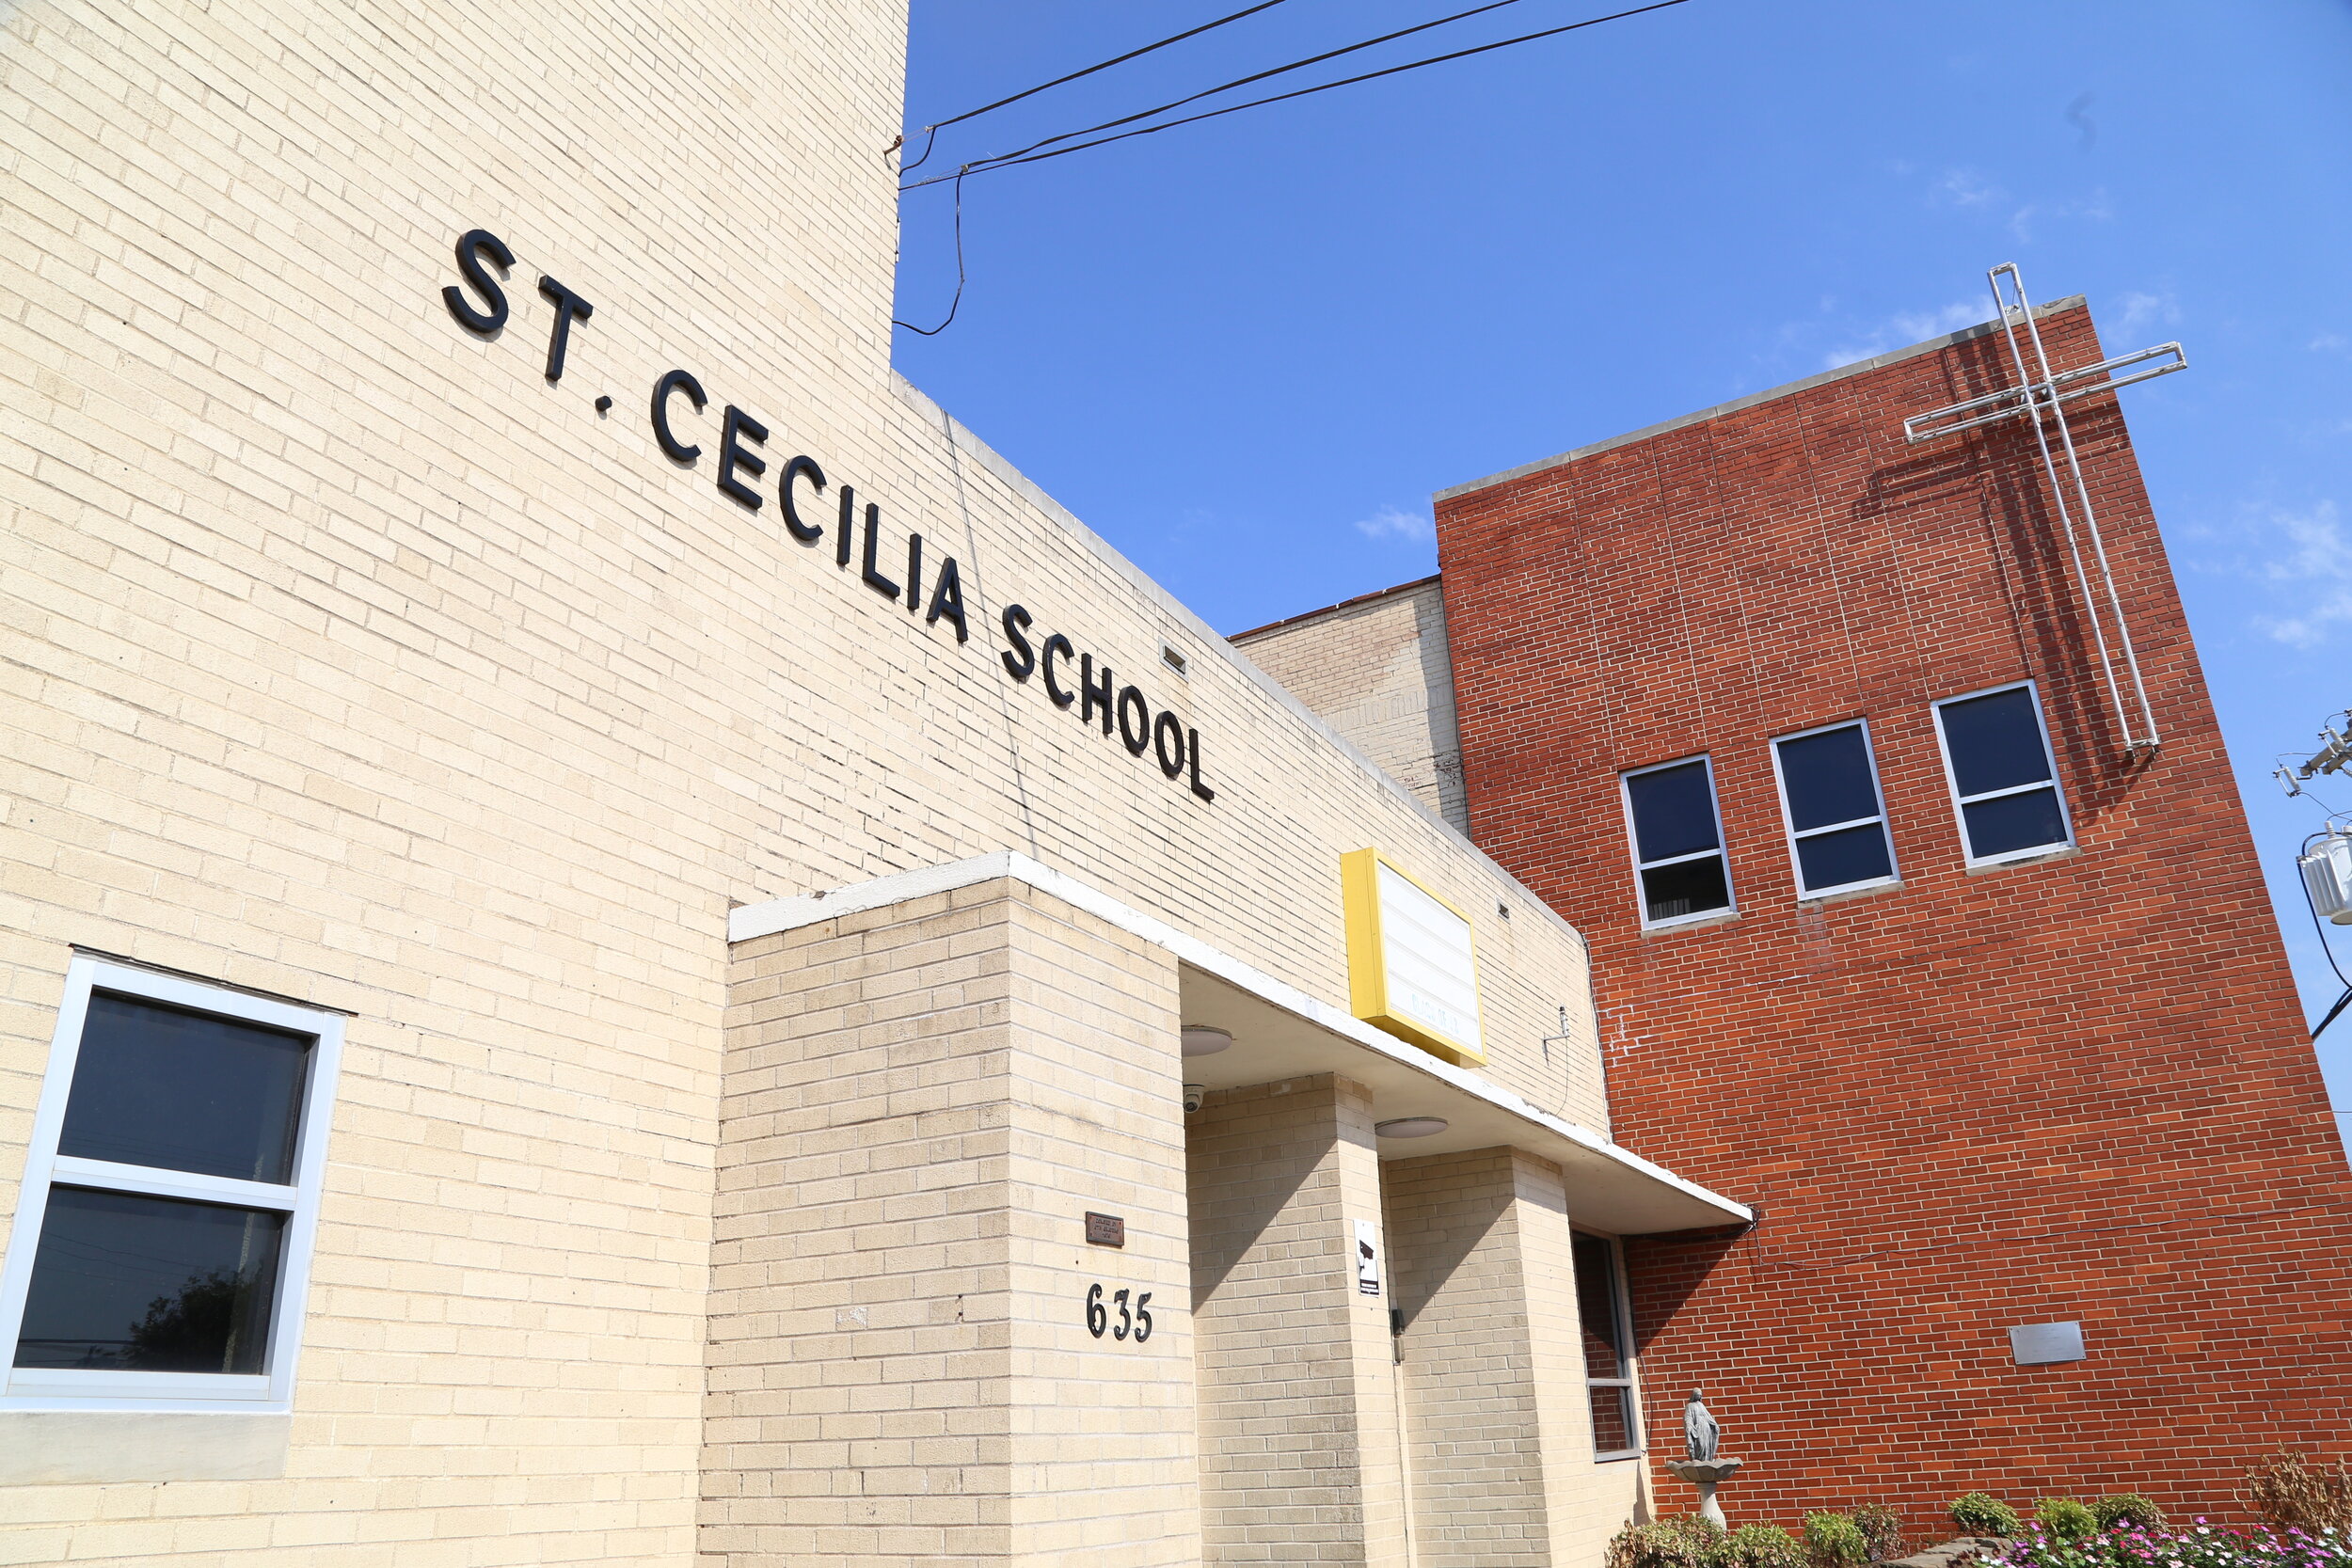 St Cecilia Catholic School